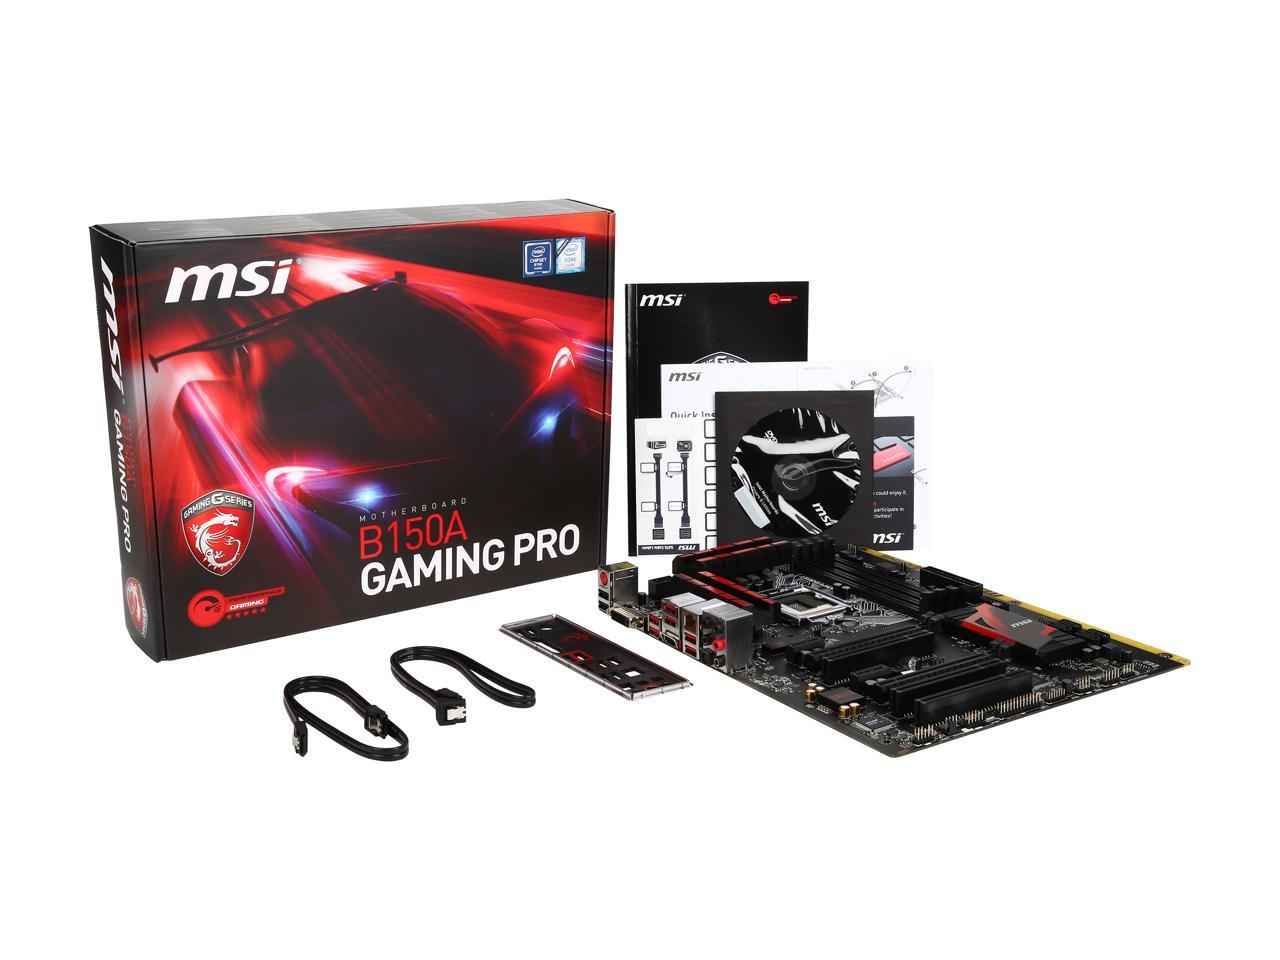 MSI b150 Gamer. MSI b150a Gaming Pro. B150m Pro Gaming MSI USB 3.0. MSI b150 Gaming m3.